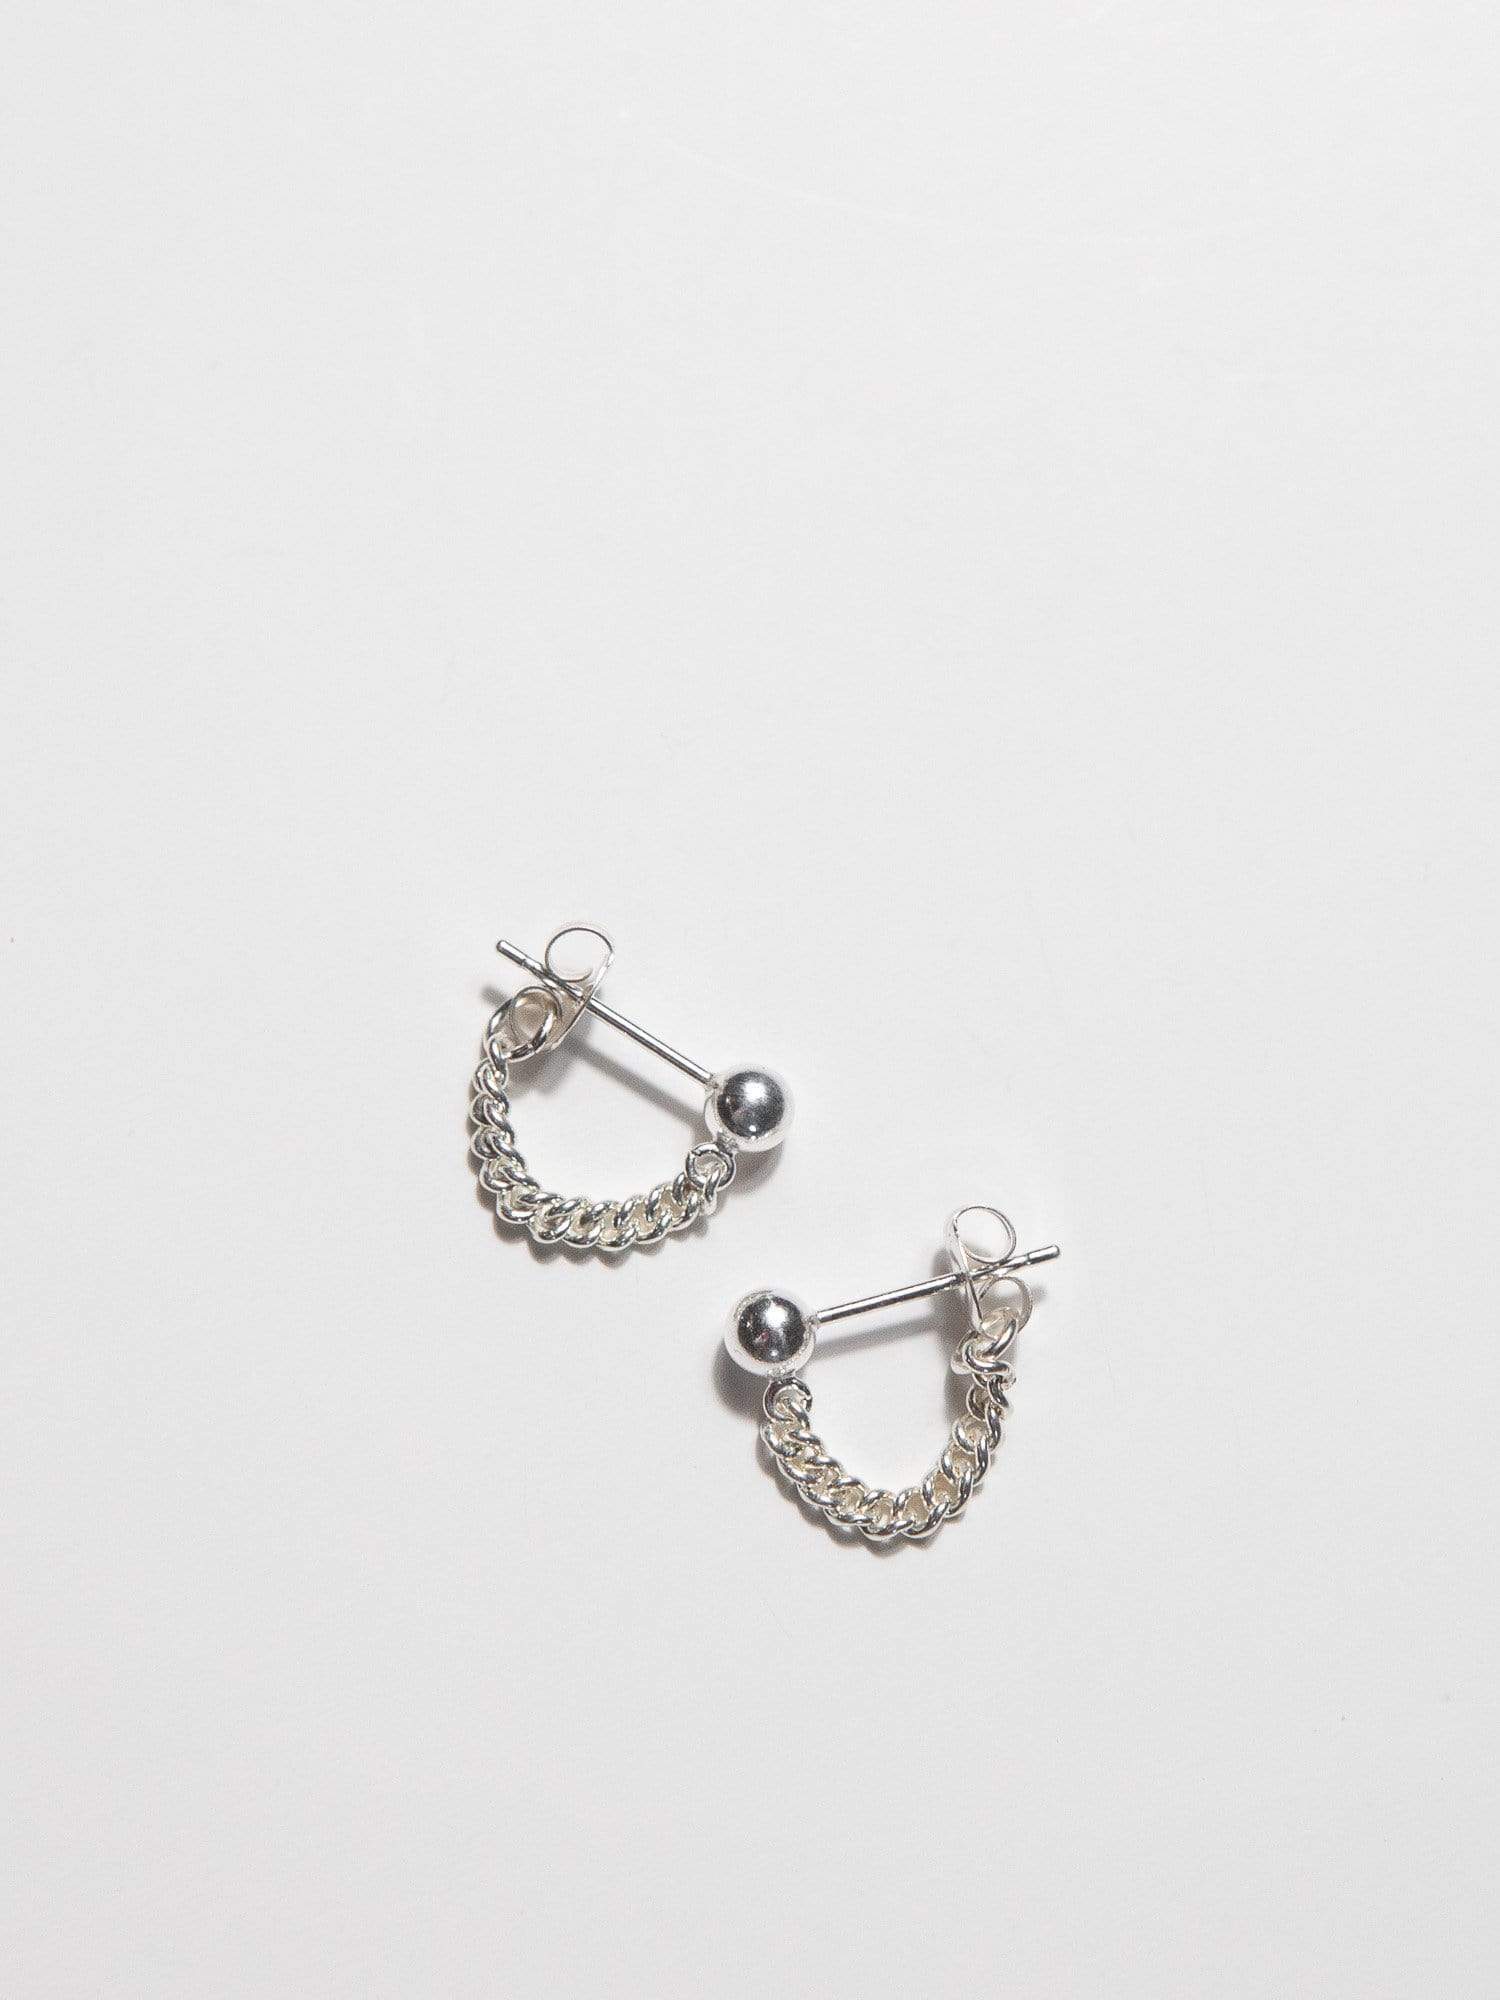 Ball & Chain Earrings - Shop OXB